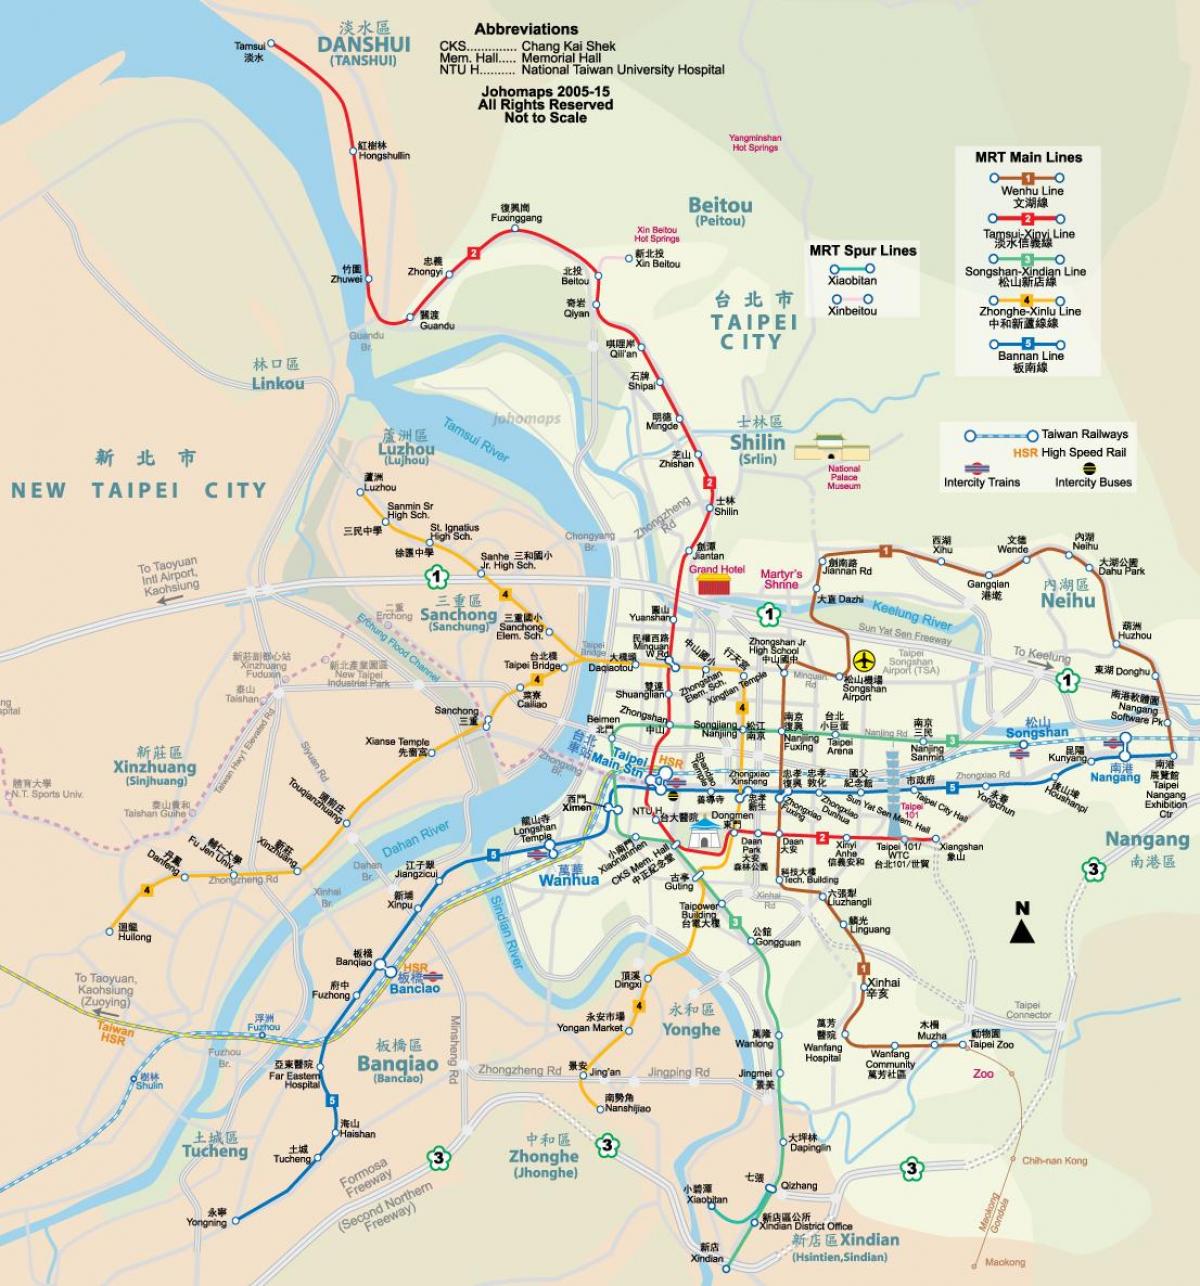 नक्शे के danshui